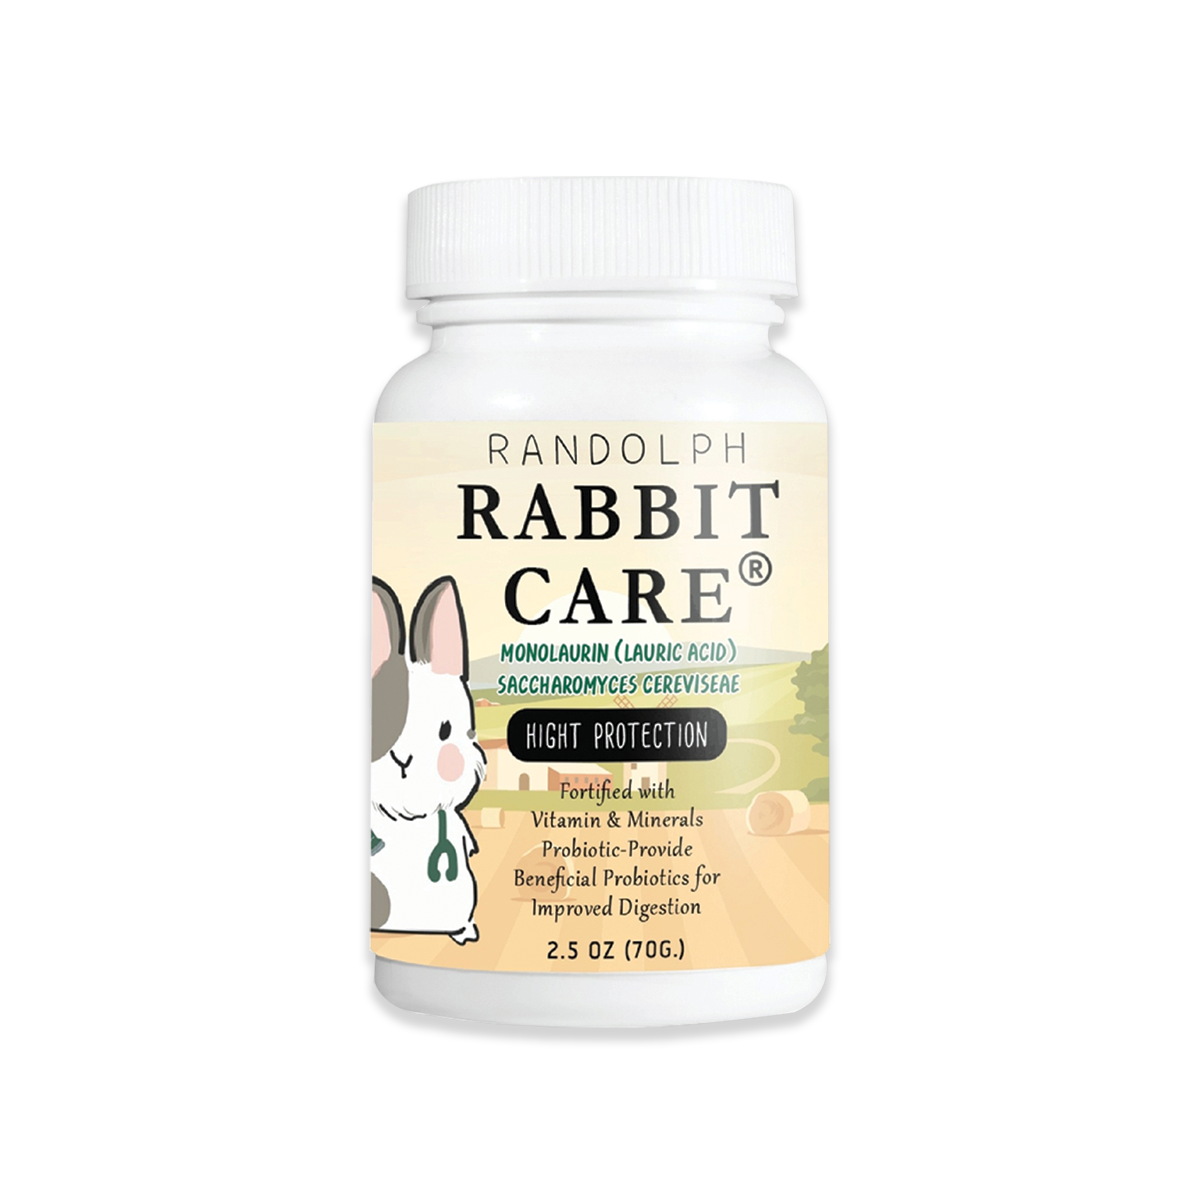 Randolph Rabbit Care mono แรนดอล์ฟ เรทบิทเเคร์ อาหารอาหารเสริมพลังงานกระต่ายป่วย ขนาด 70 กรัม